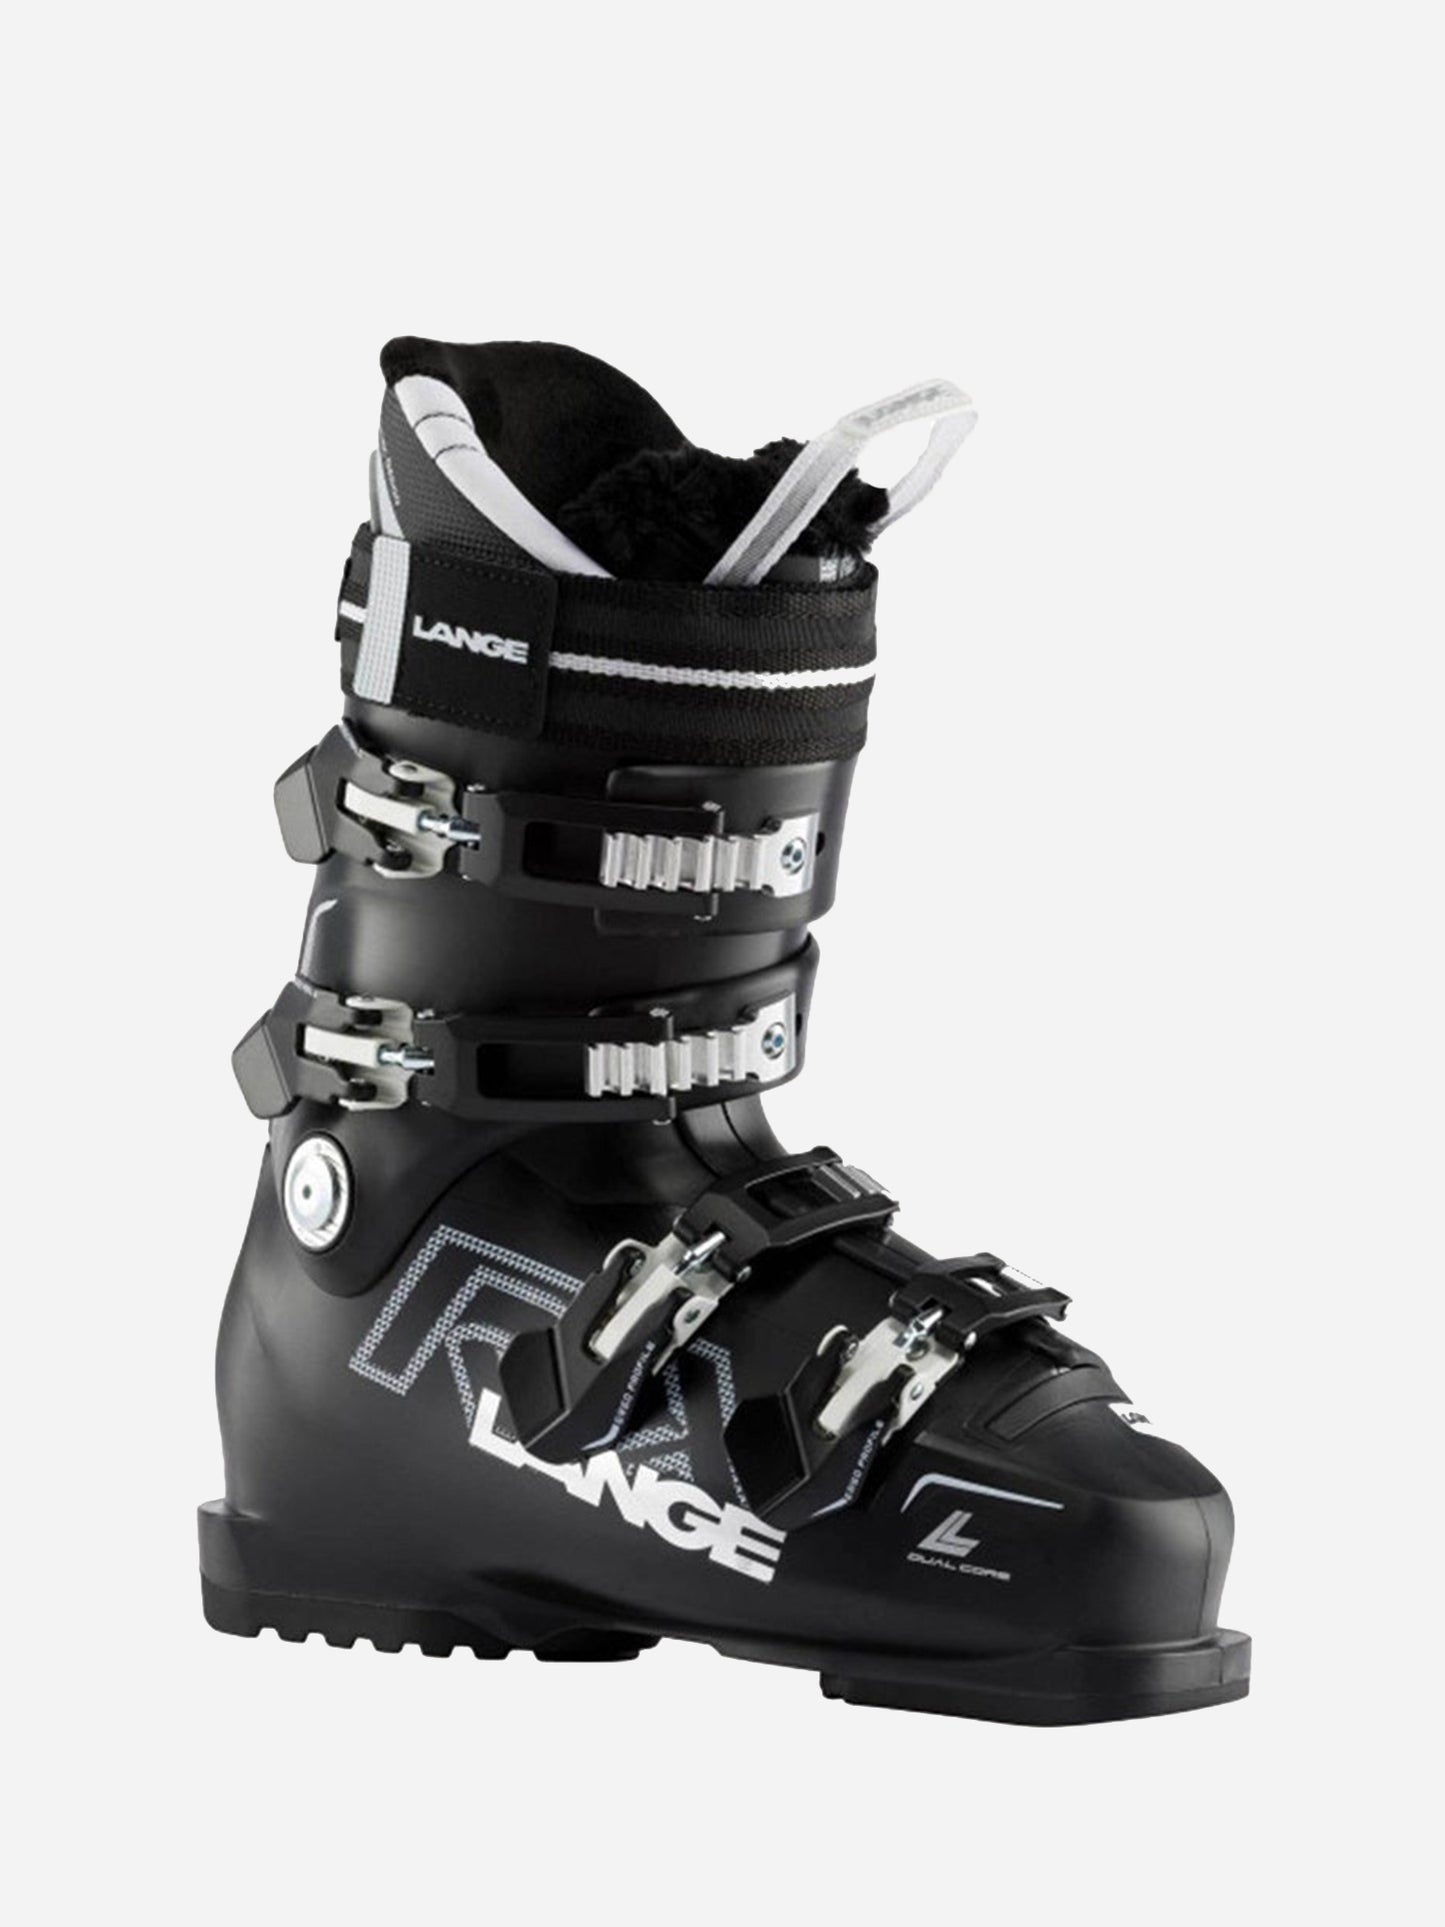 Lange Women's RX 80 All Mountain Piste Ski Boots 2021